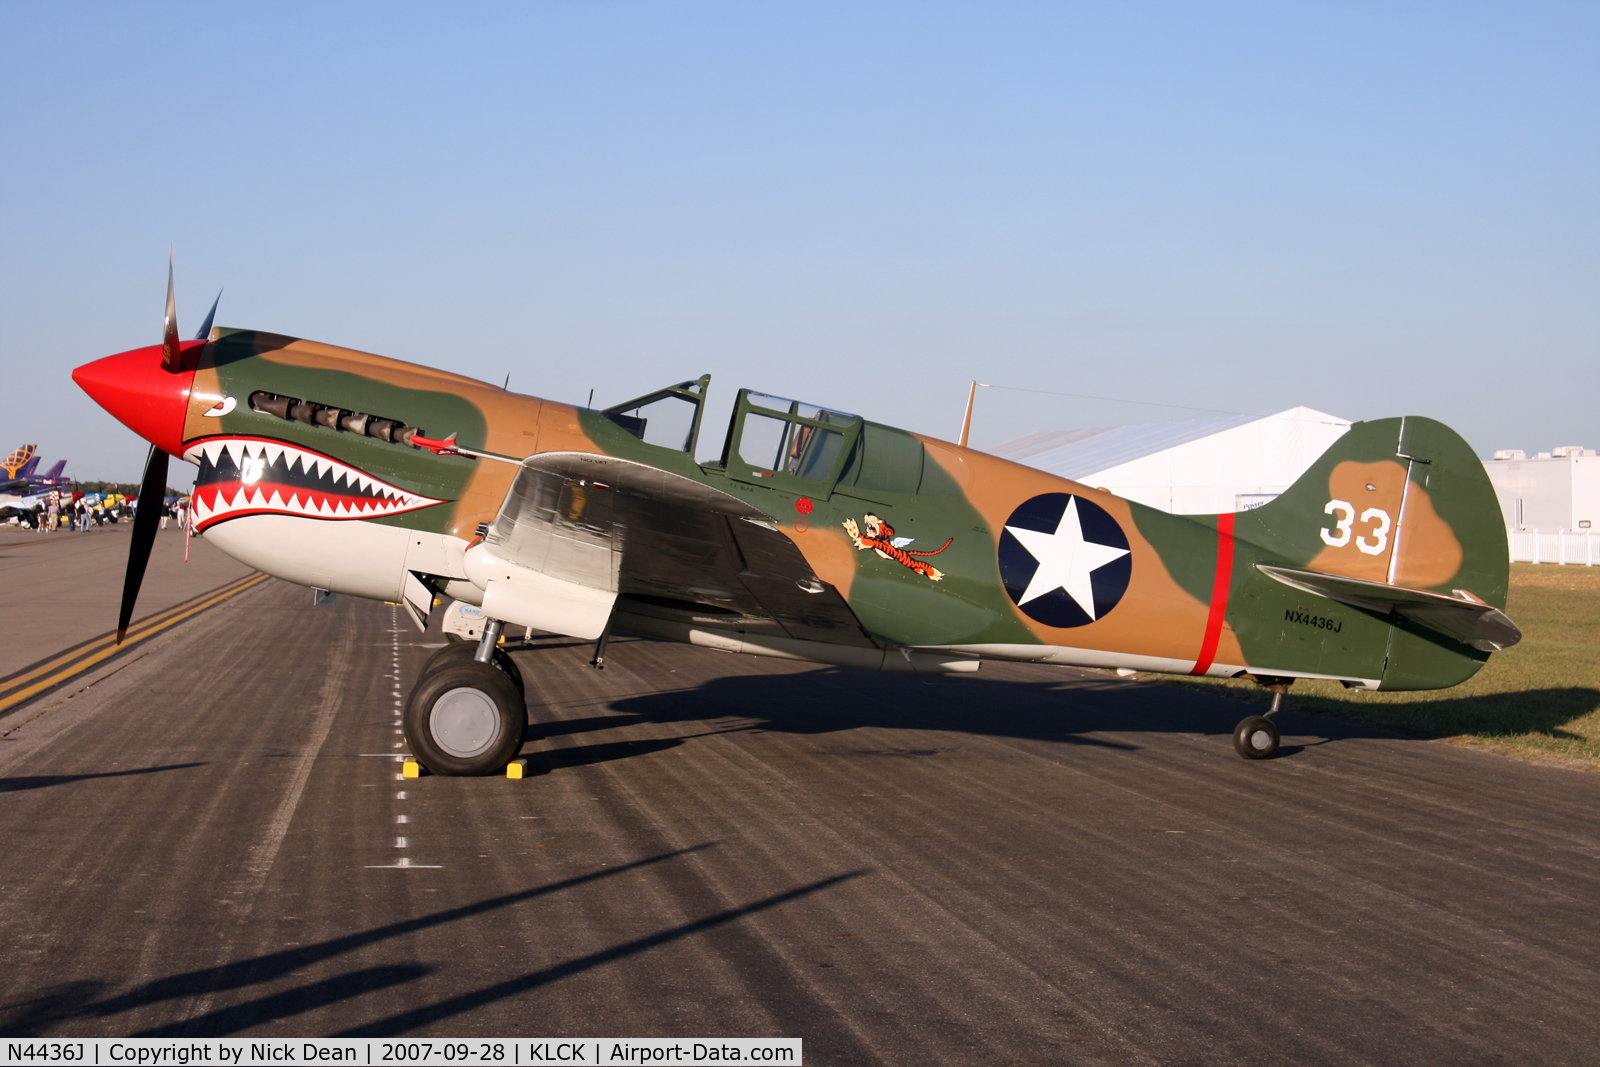 N4436J, 1942 Curtiss P-40K Warhawk C/N 21117, C/N 21117 not the military serial # as mistakenly posted again